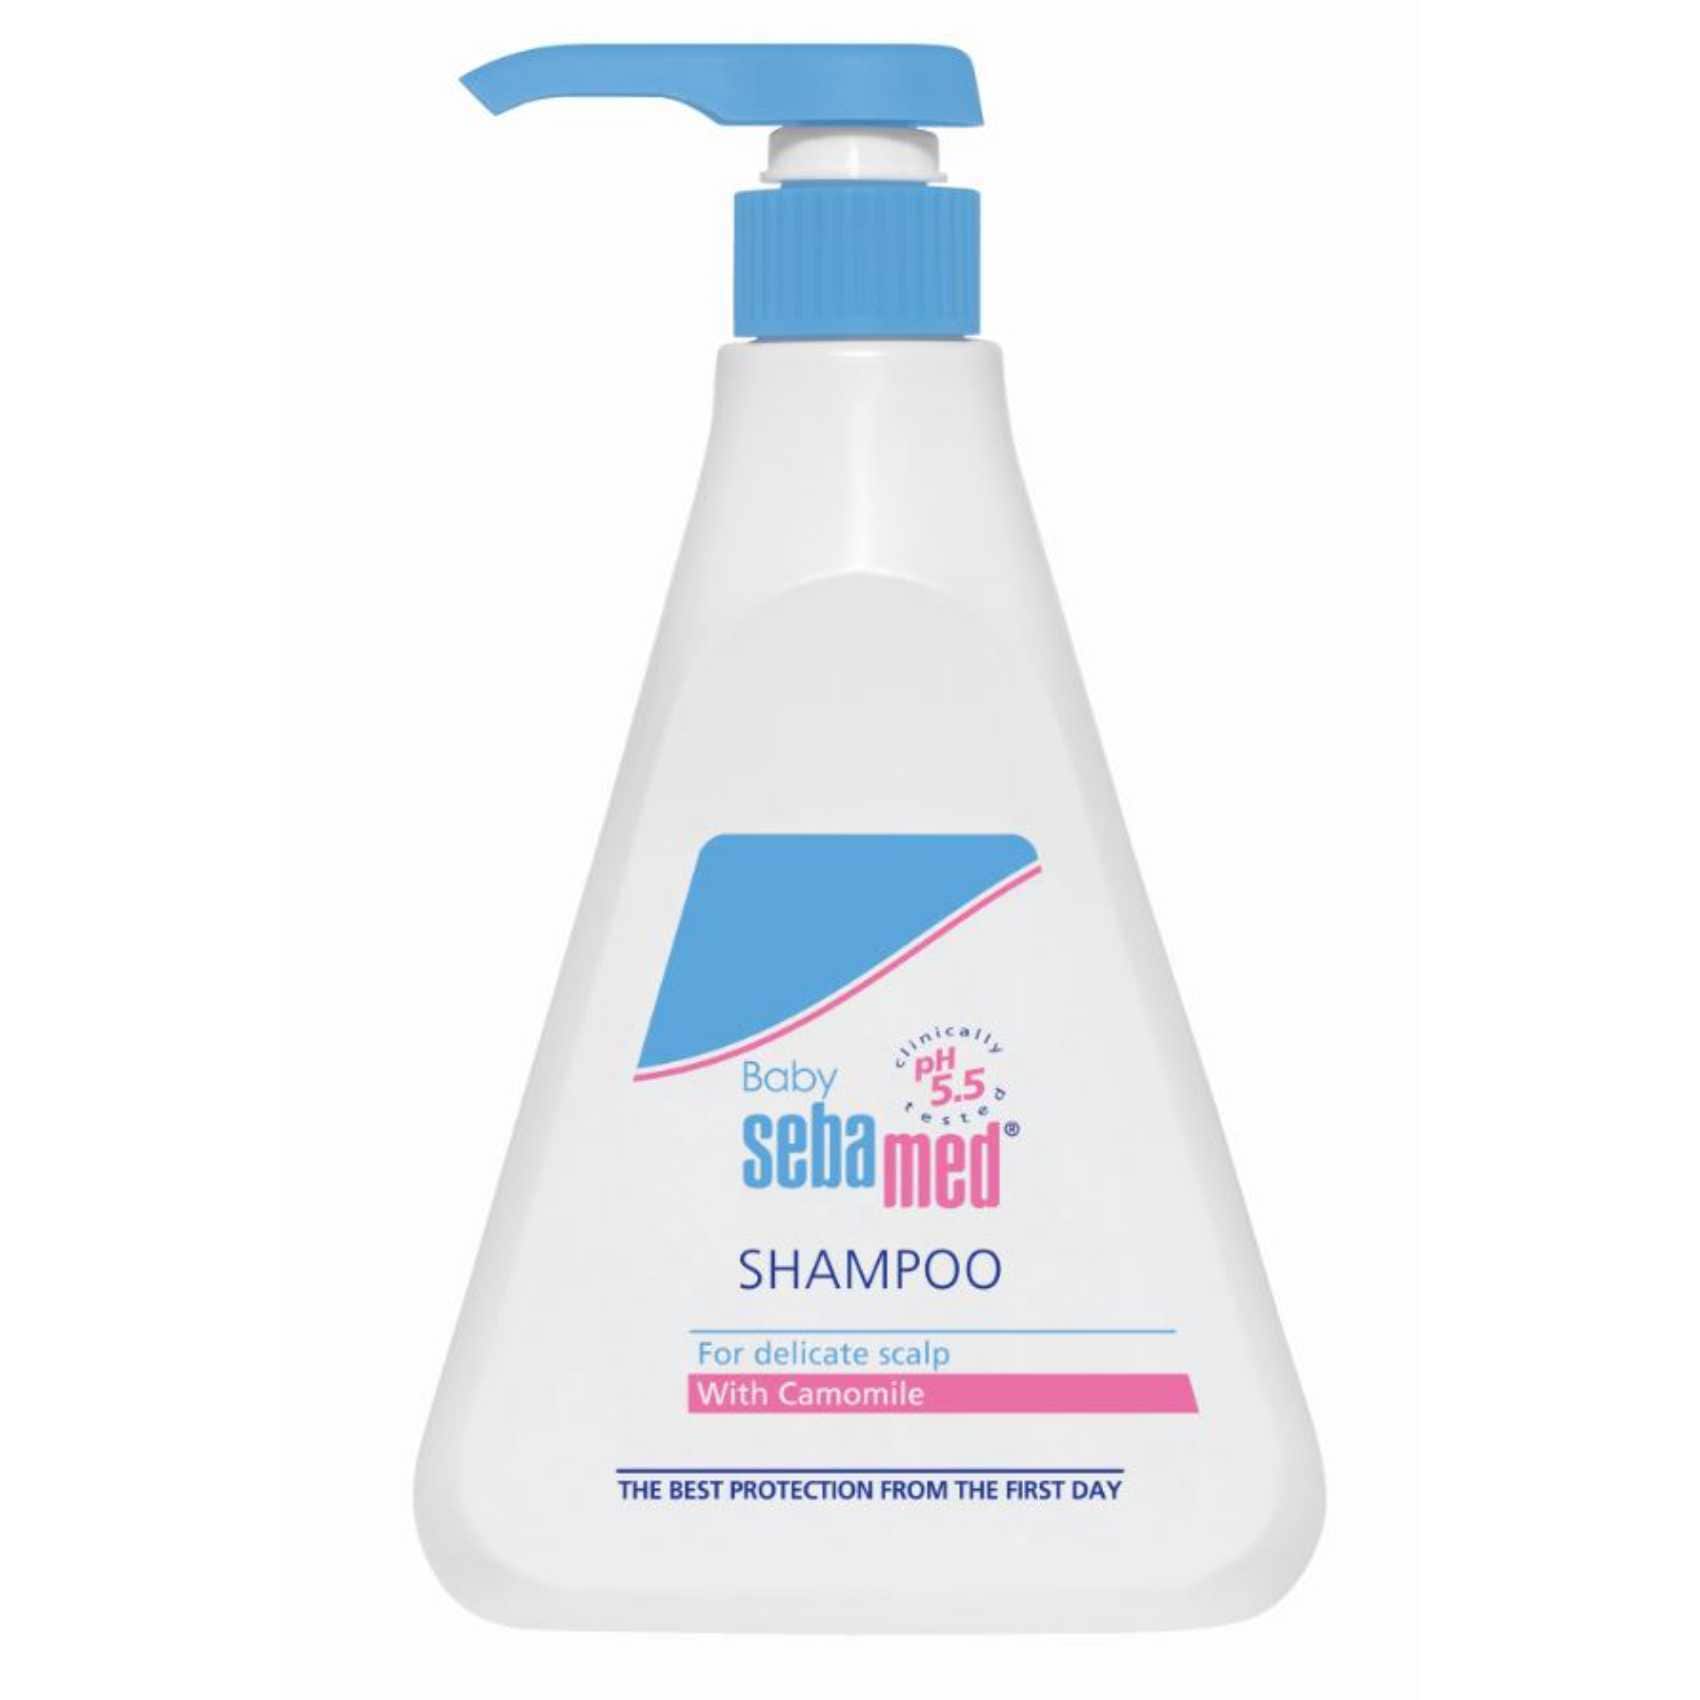 Sebamed Shampoo 500ml Home